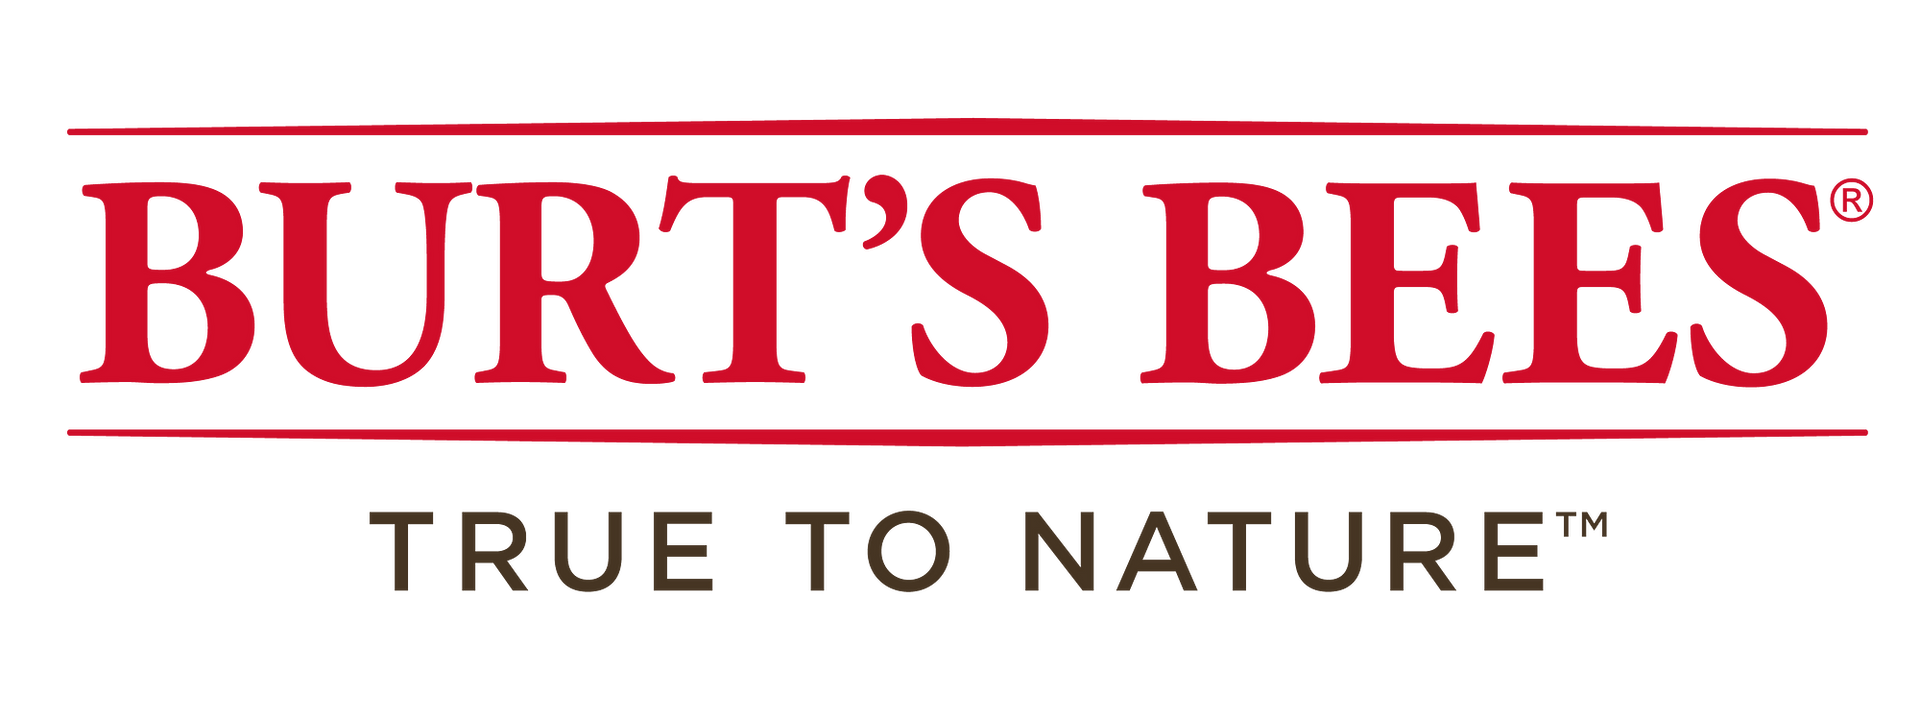 Burt's Bees logo - 